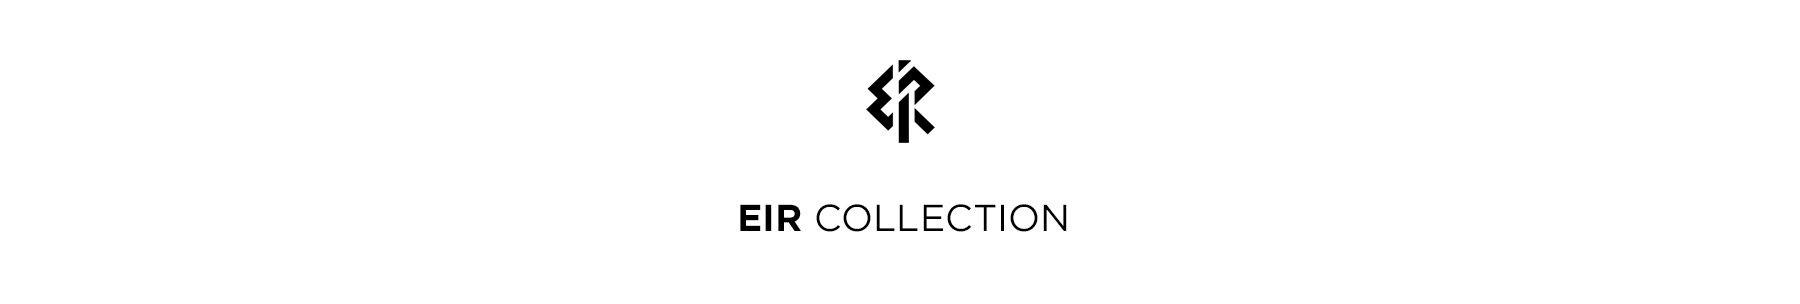 Eir Collection